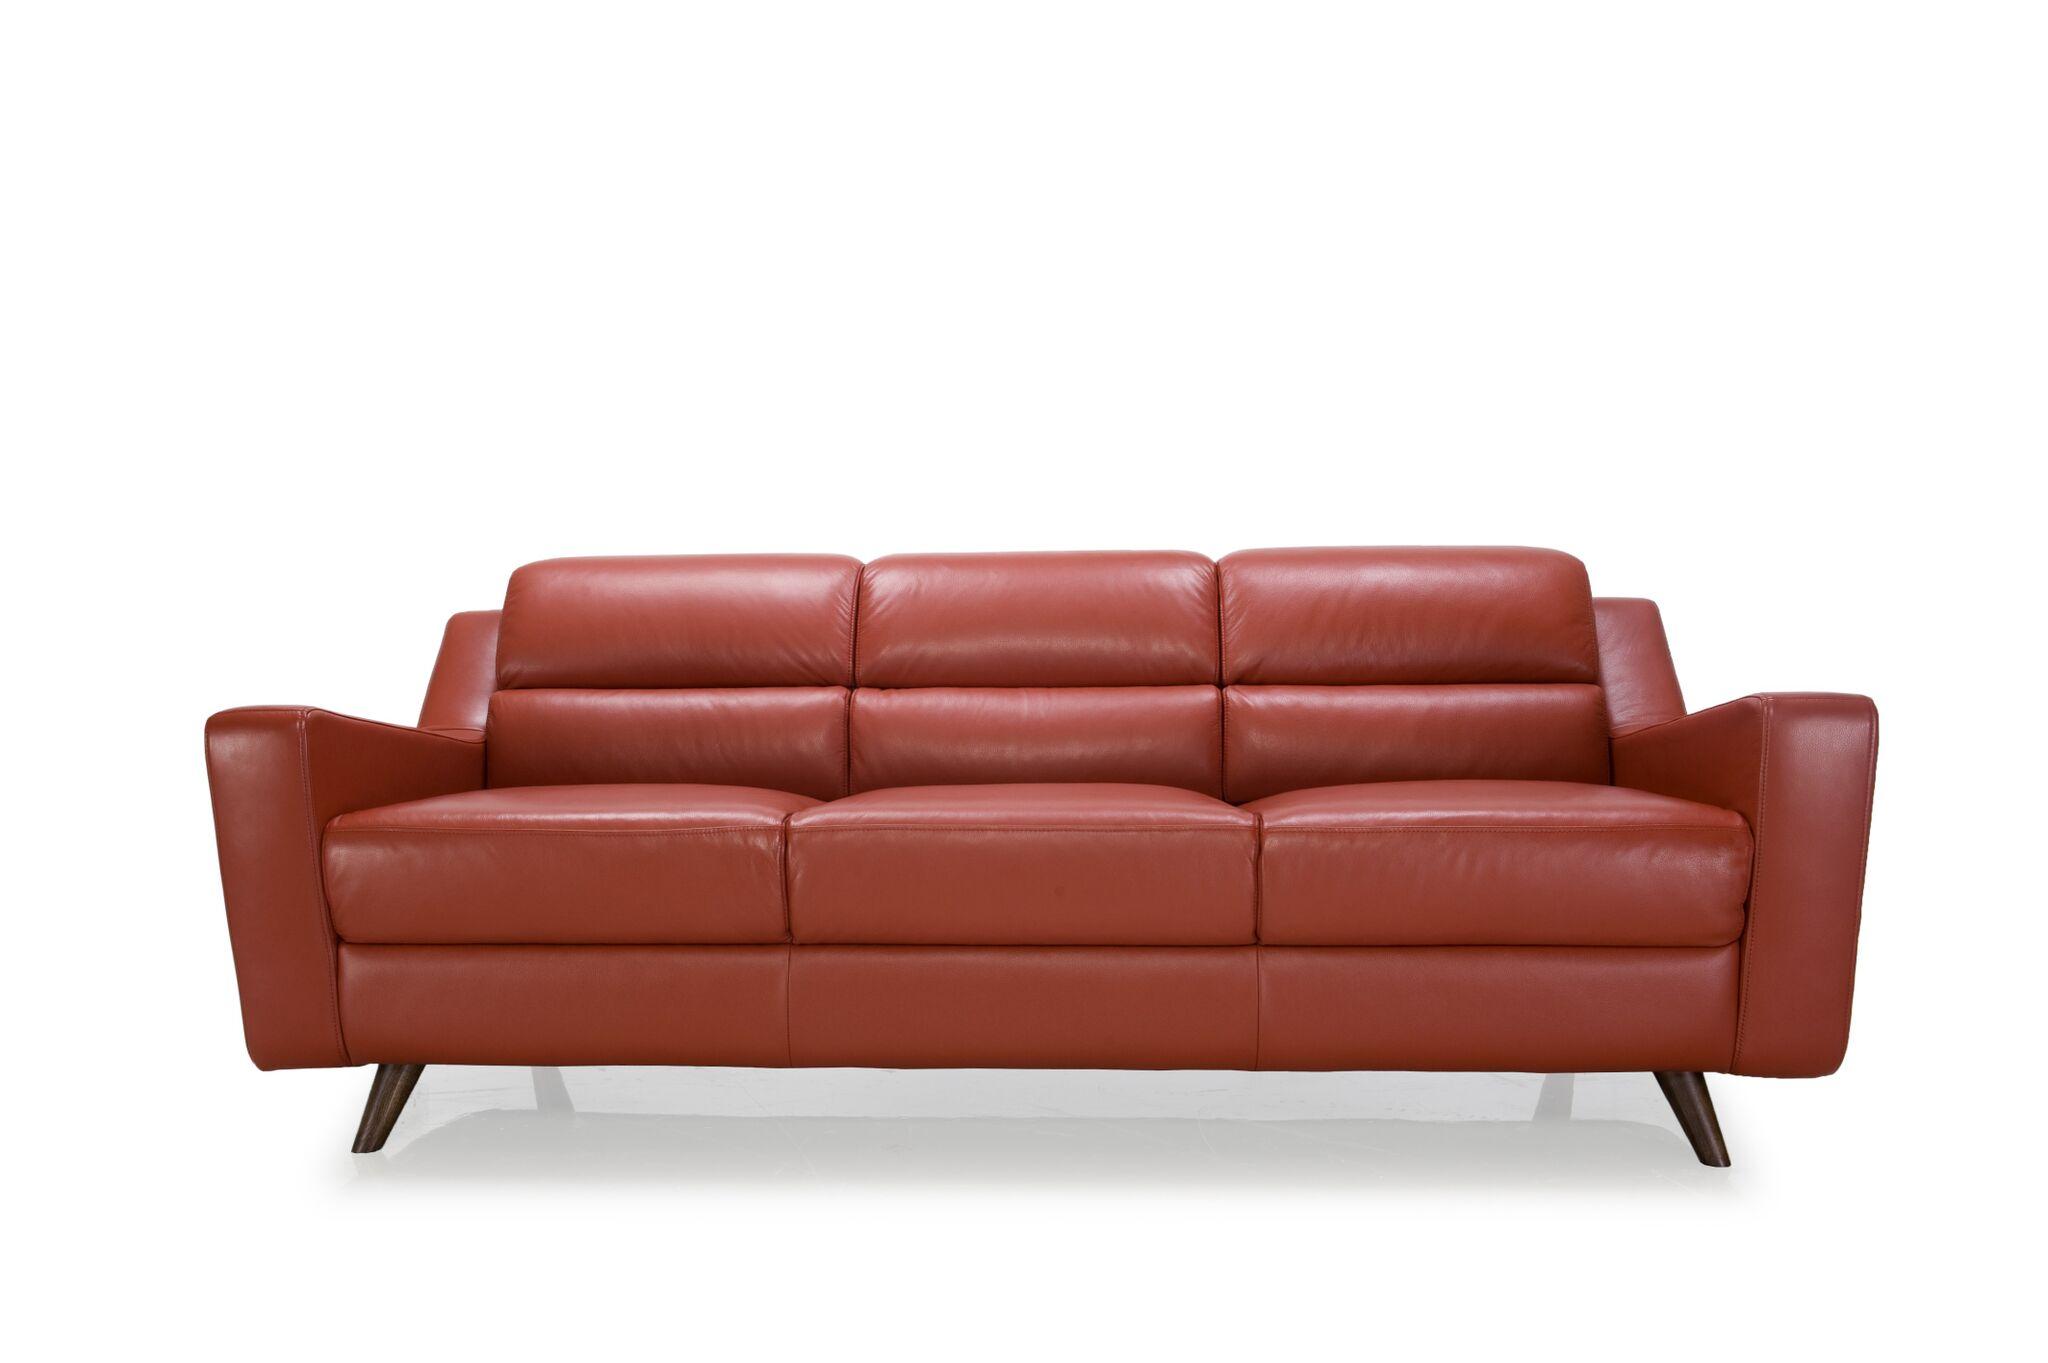 

    
Moroni Lucia 358 Brick Red Top Grain Leather Upholstery Mid-Century Sofa Set 2Pcs
